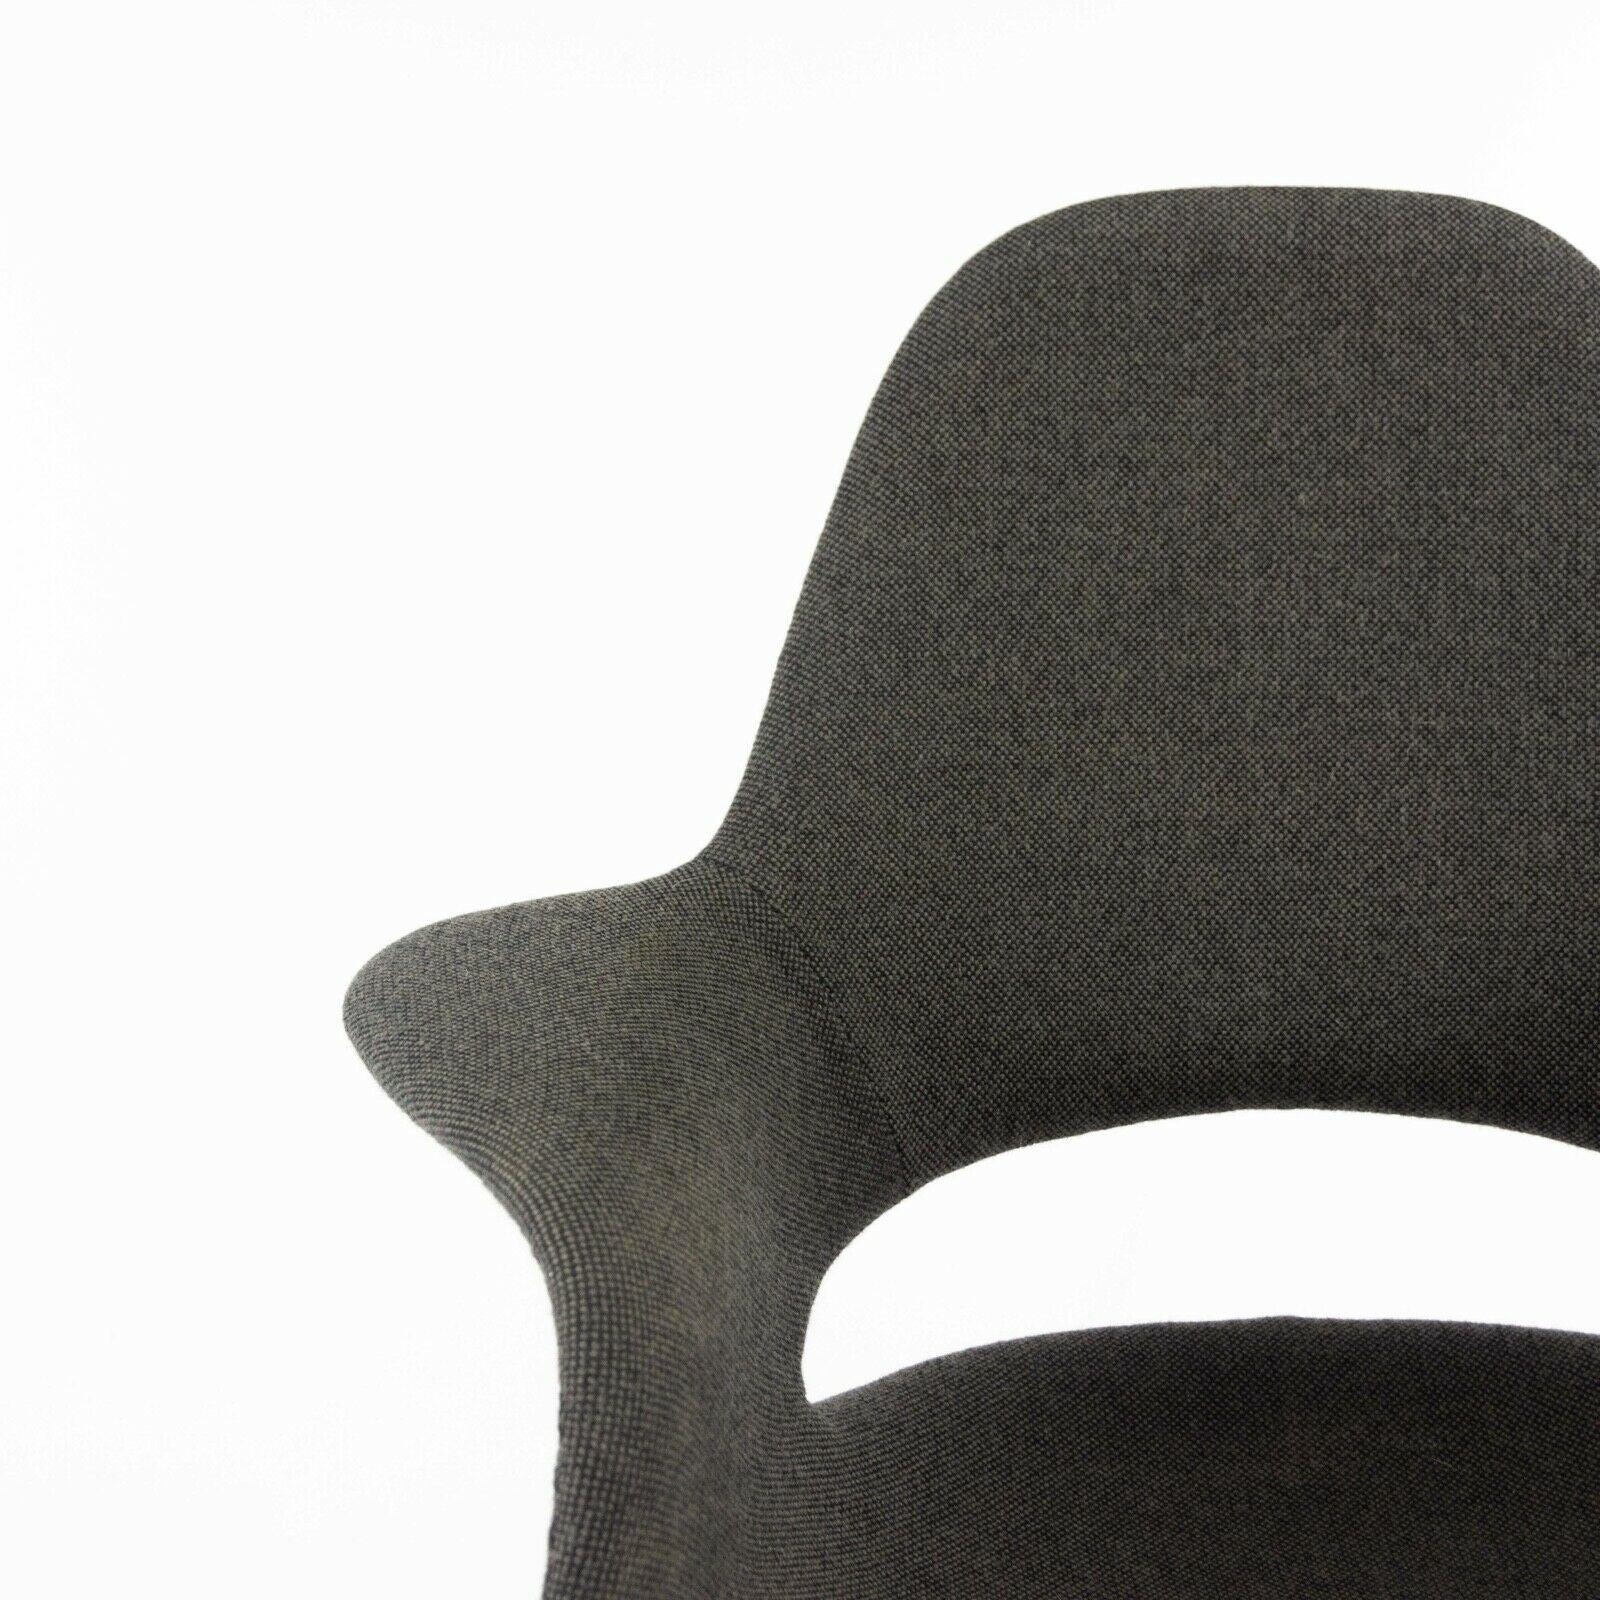 2010s Charles Eames & Eero Saarinen Organic Chairs by Vitra in Dark Gray Fabric For Sale 3